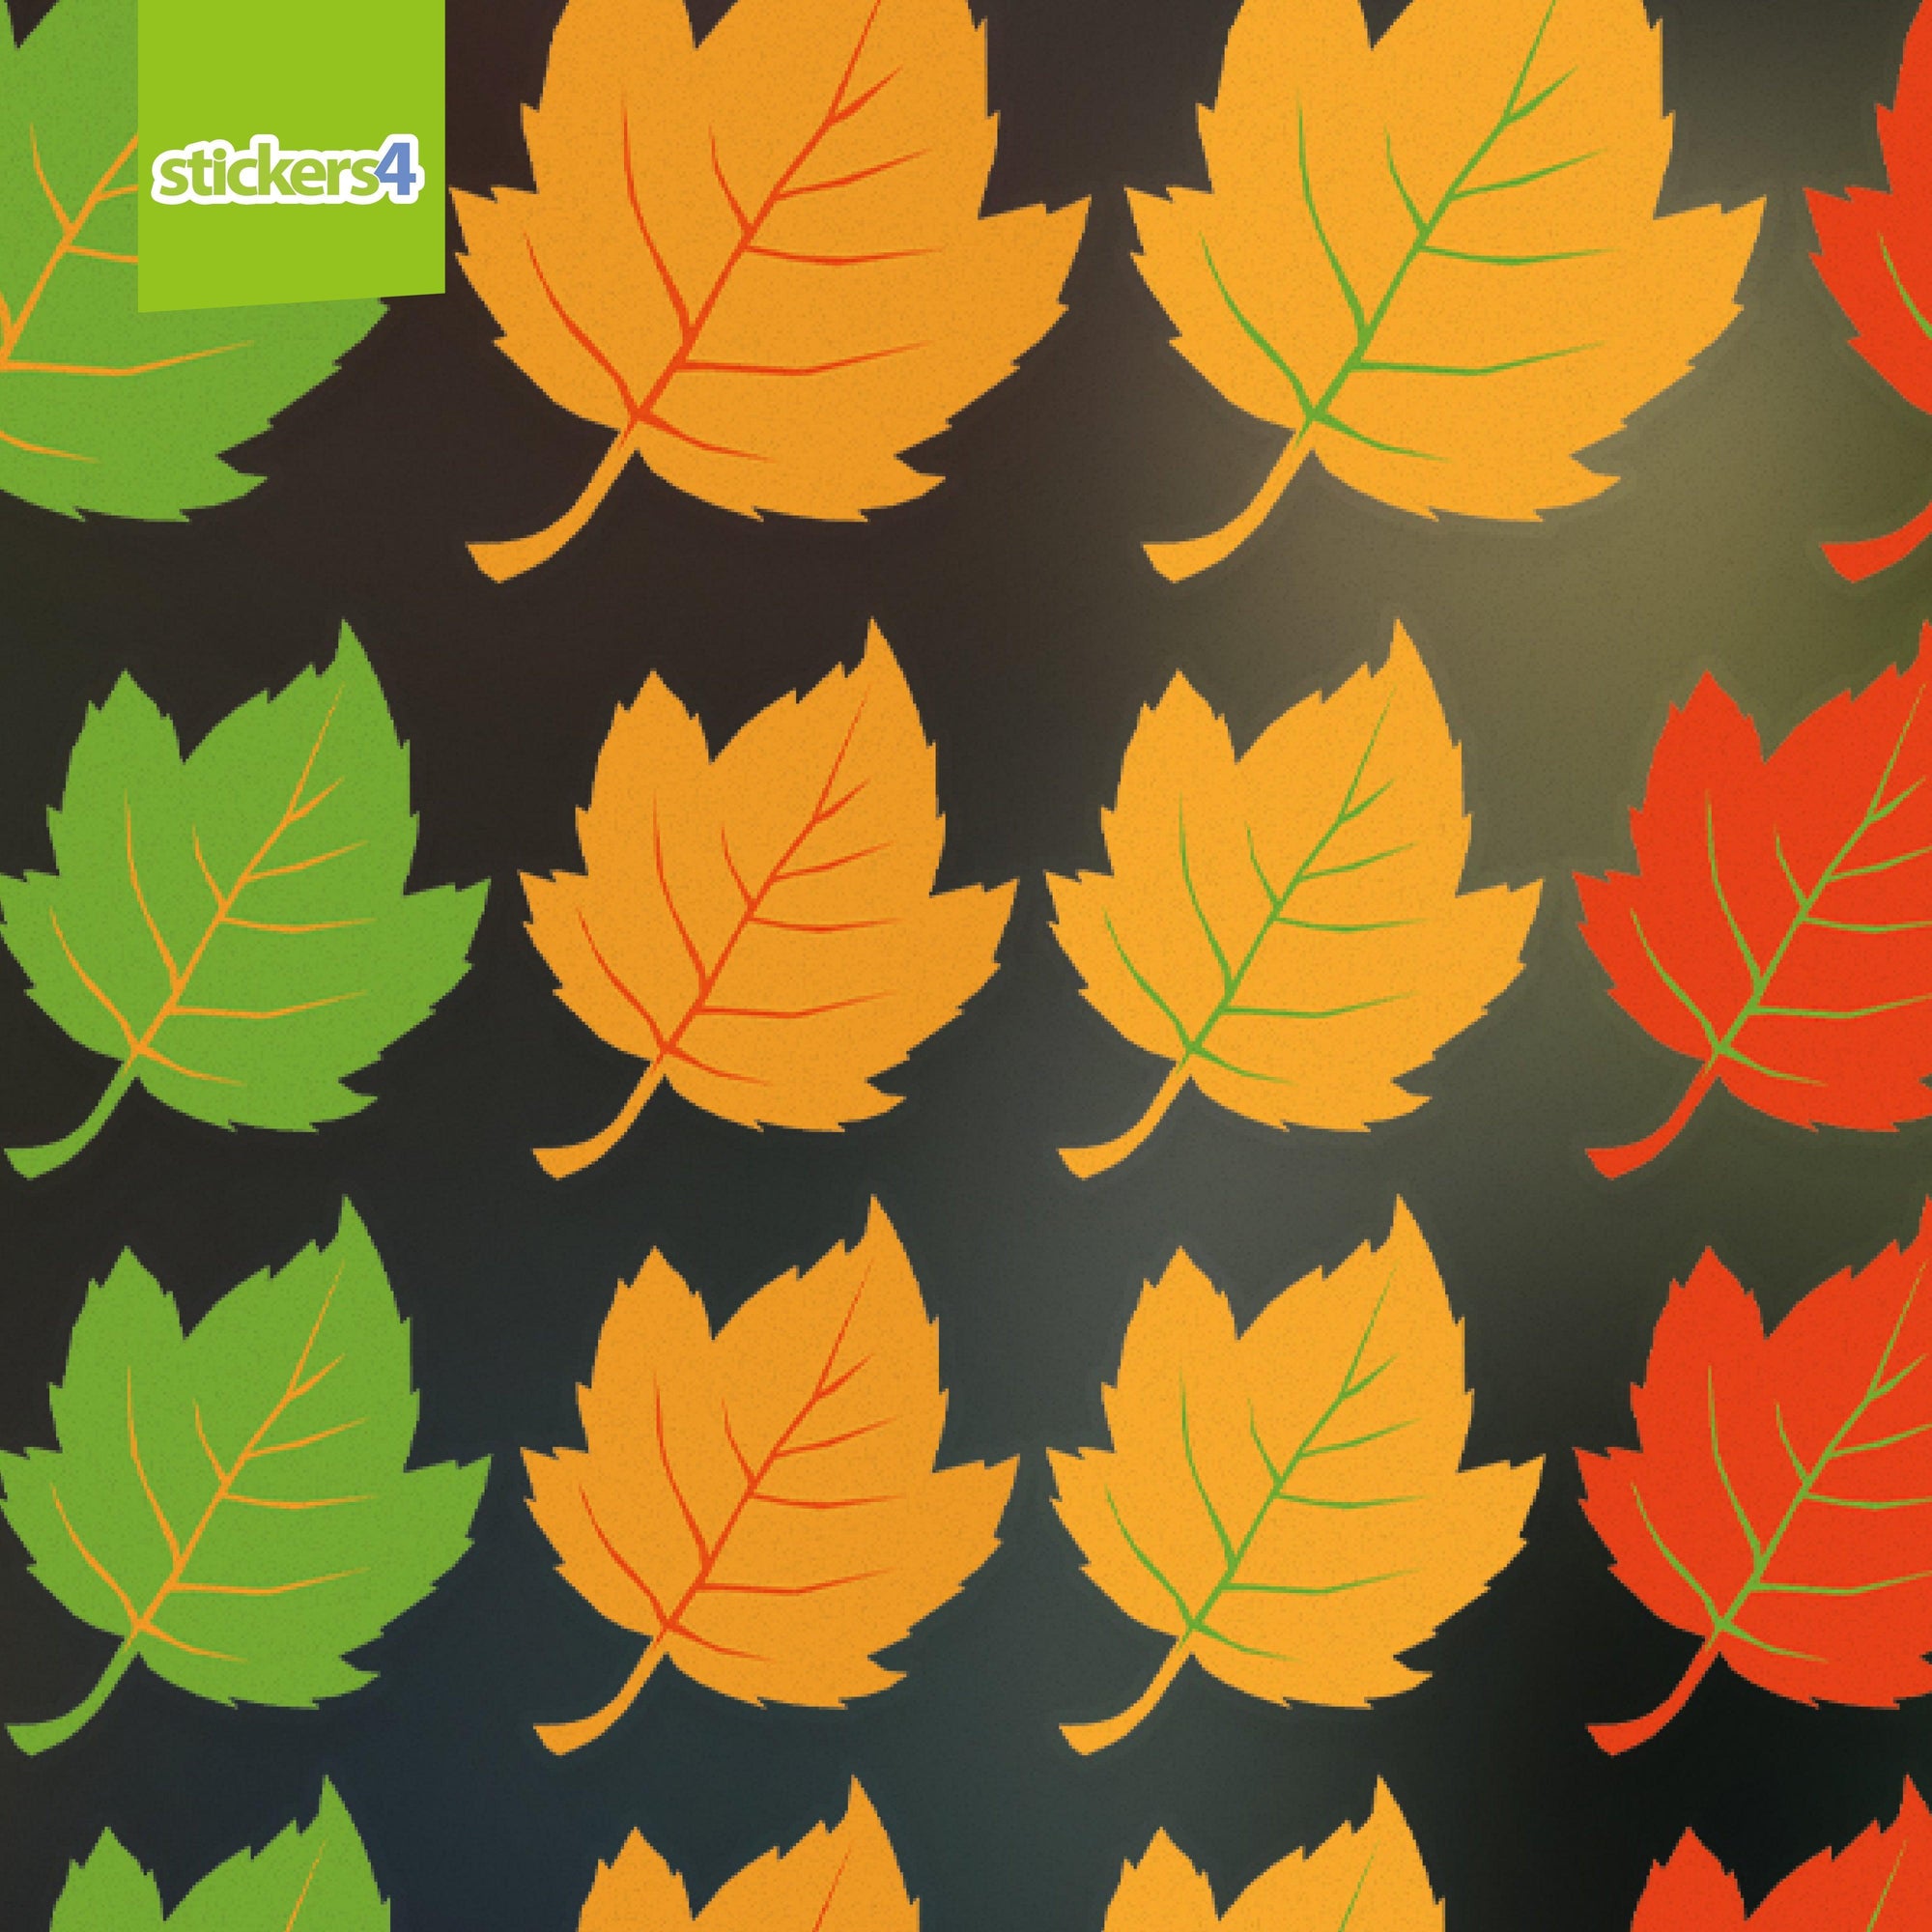 Standard Autumn Leaves Window Stickers - Pack 3 Autumn Window Display